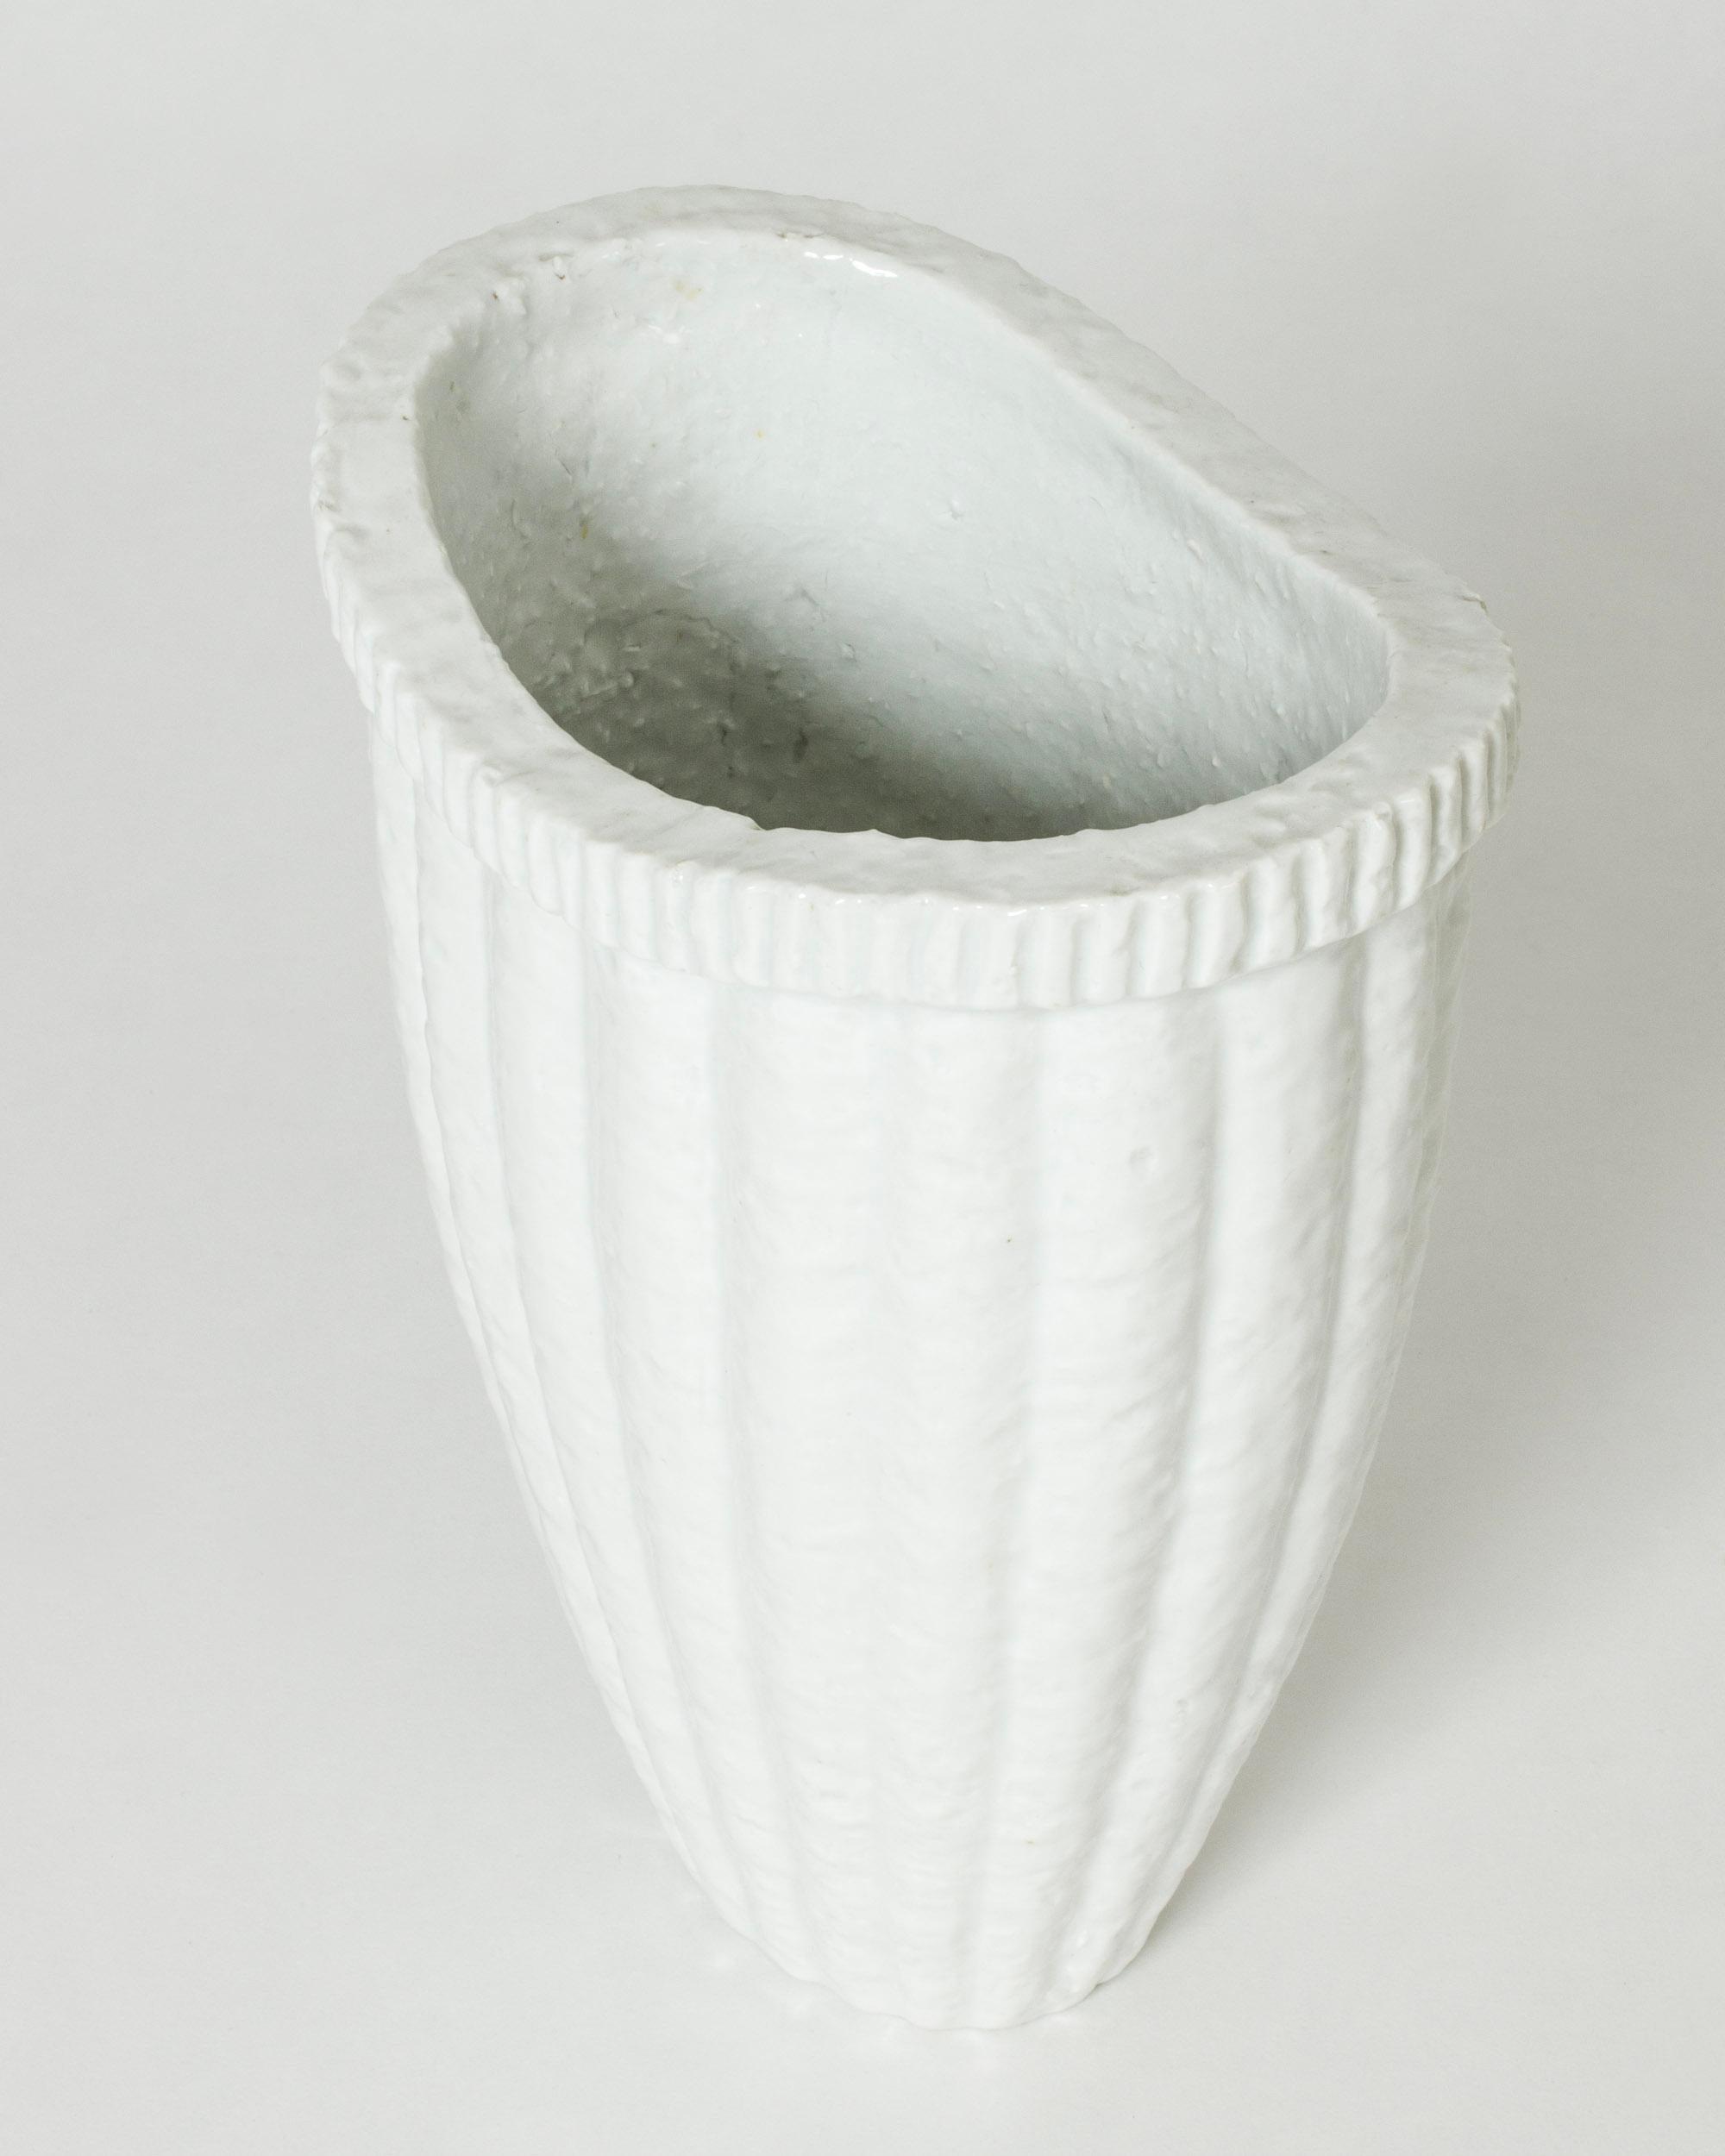 Scandinavian Modern Midcentury Stoneware Vase by Gunnar Nylund for Rörstrand, Sweden, 1940s For Sale